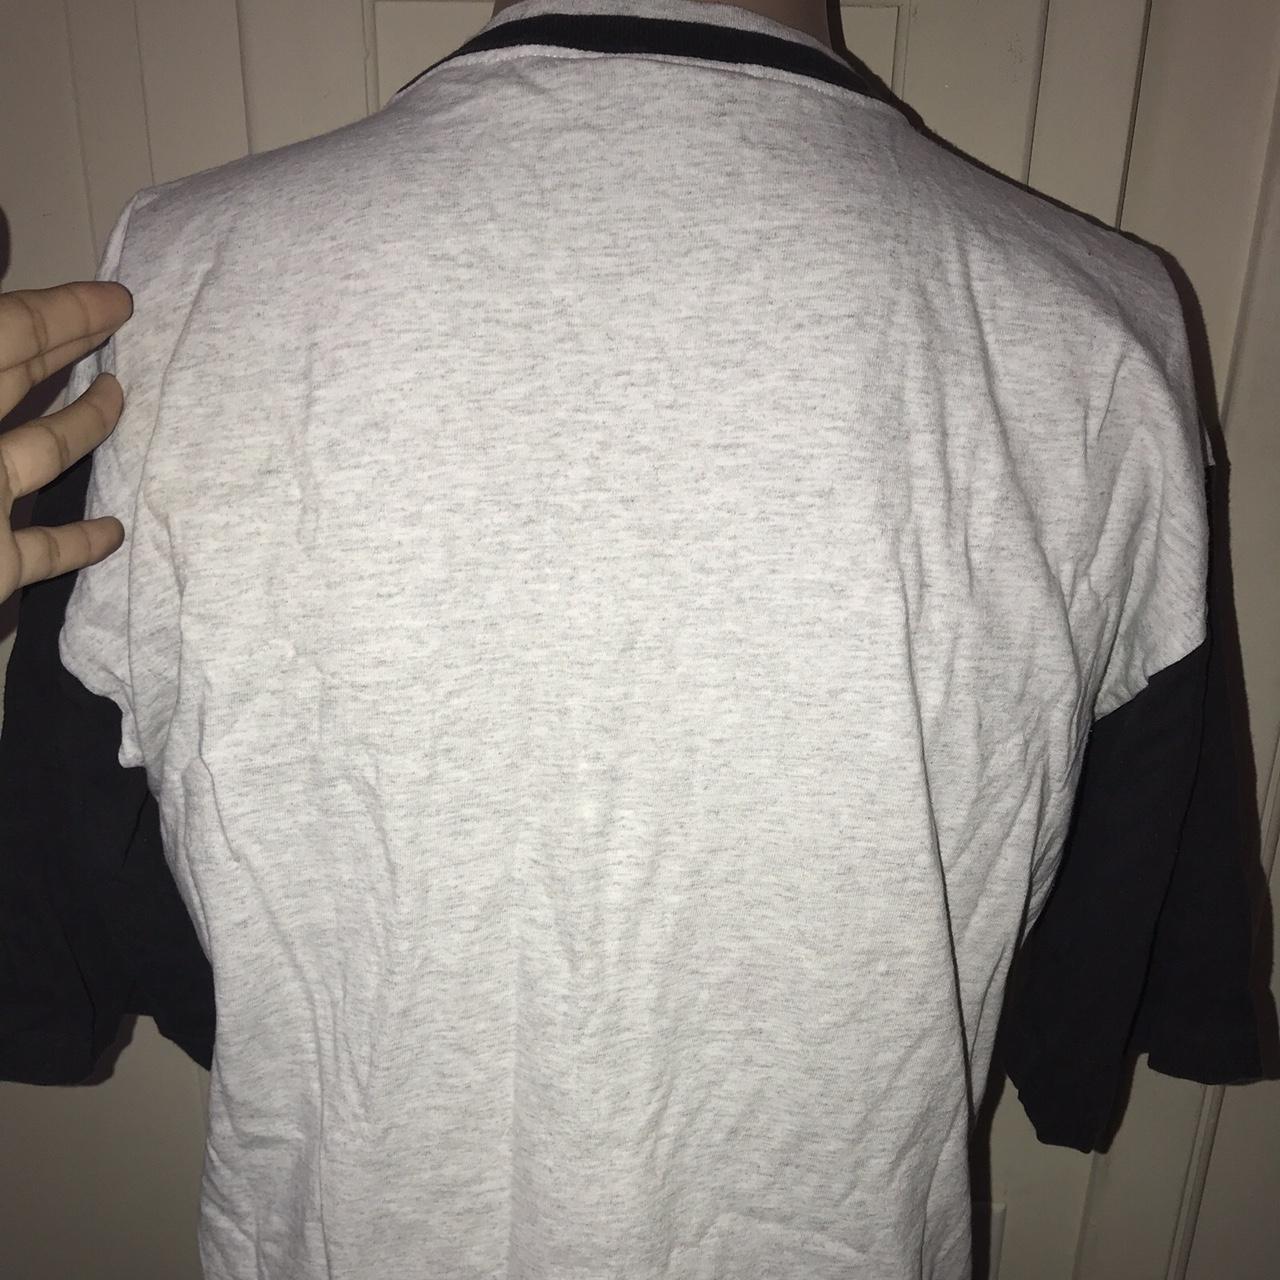 Kleding Herenkleding Overhemden & T-shirts T-shirts T-shirts met print Vintage ‘95 Looney Tunes ‘All Star Game’ Baseball Shirt 